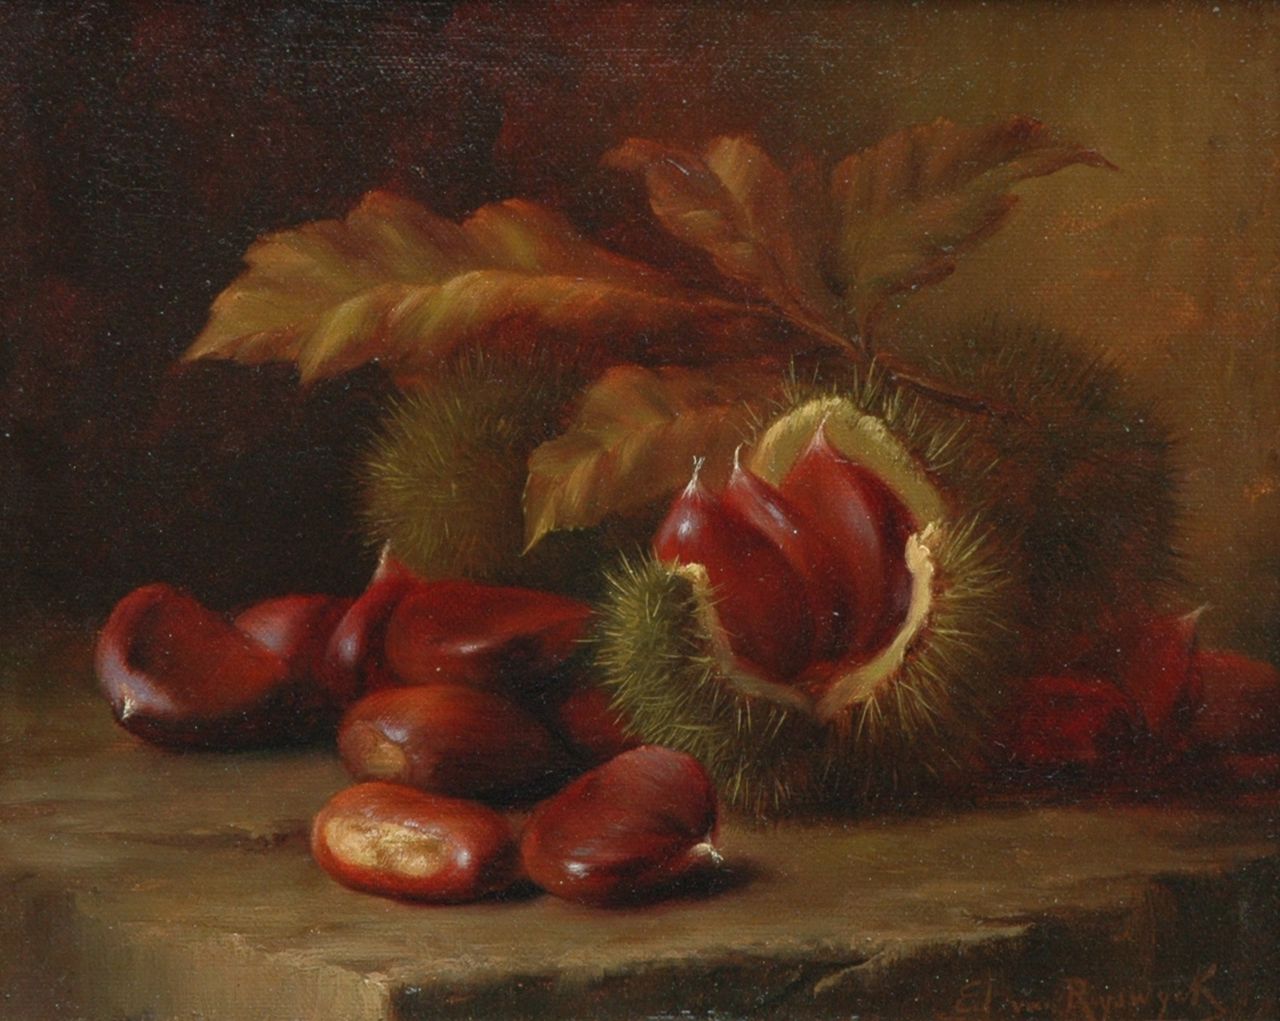 Ryswyck E. van | Edward van Ryswyck, Still life with sweet chestnuts, Ölfarbeskizze auf Malereifaser 21,8 x 26,8 cm, signed l.r.